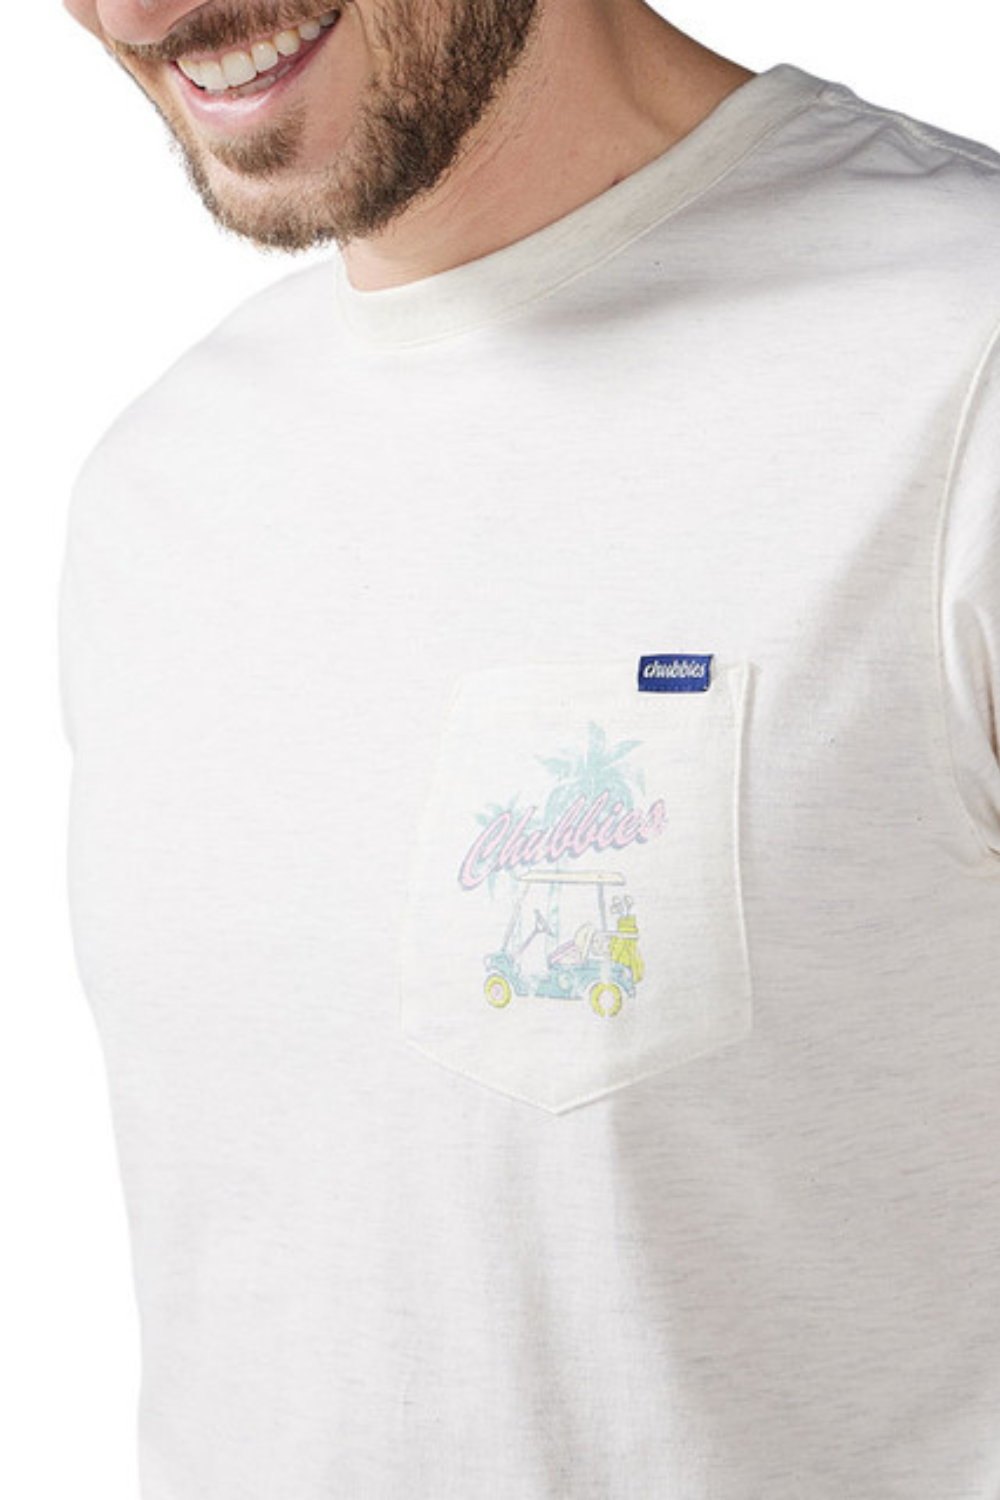 Chubbies The Par-Tee Pocket T-Shirt